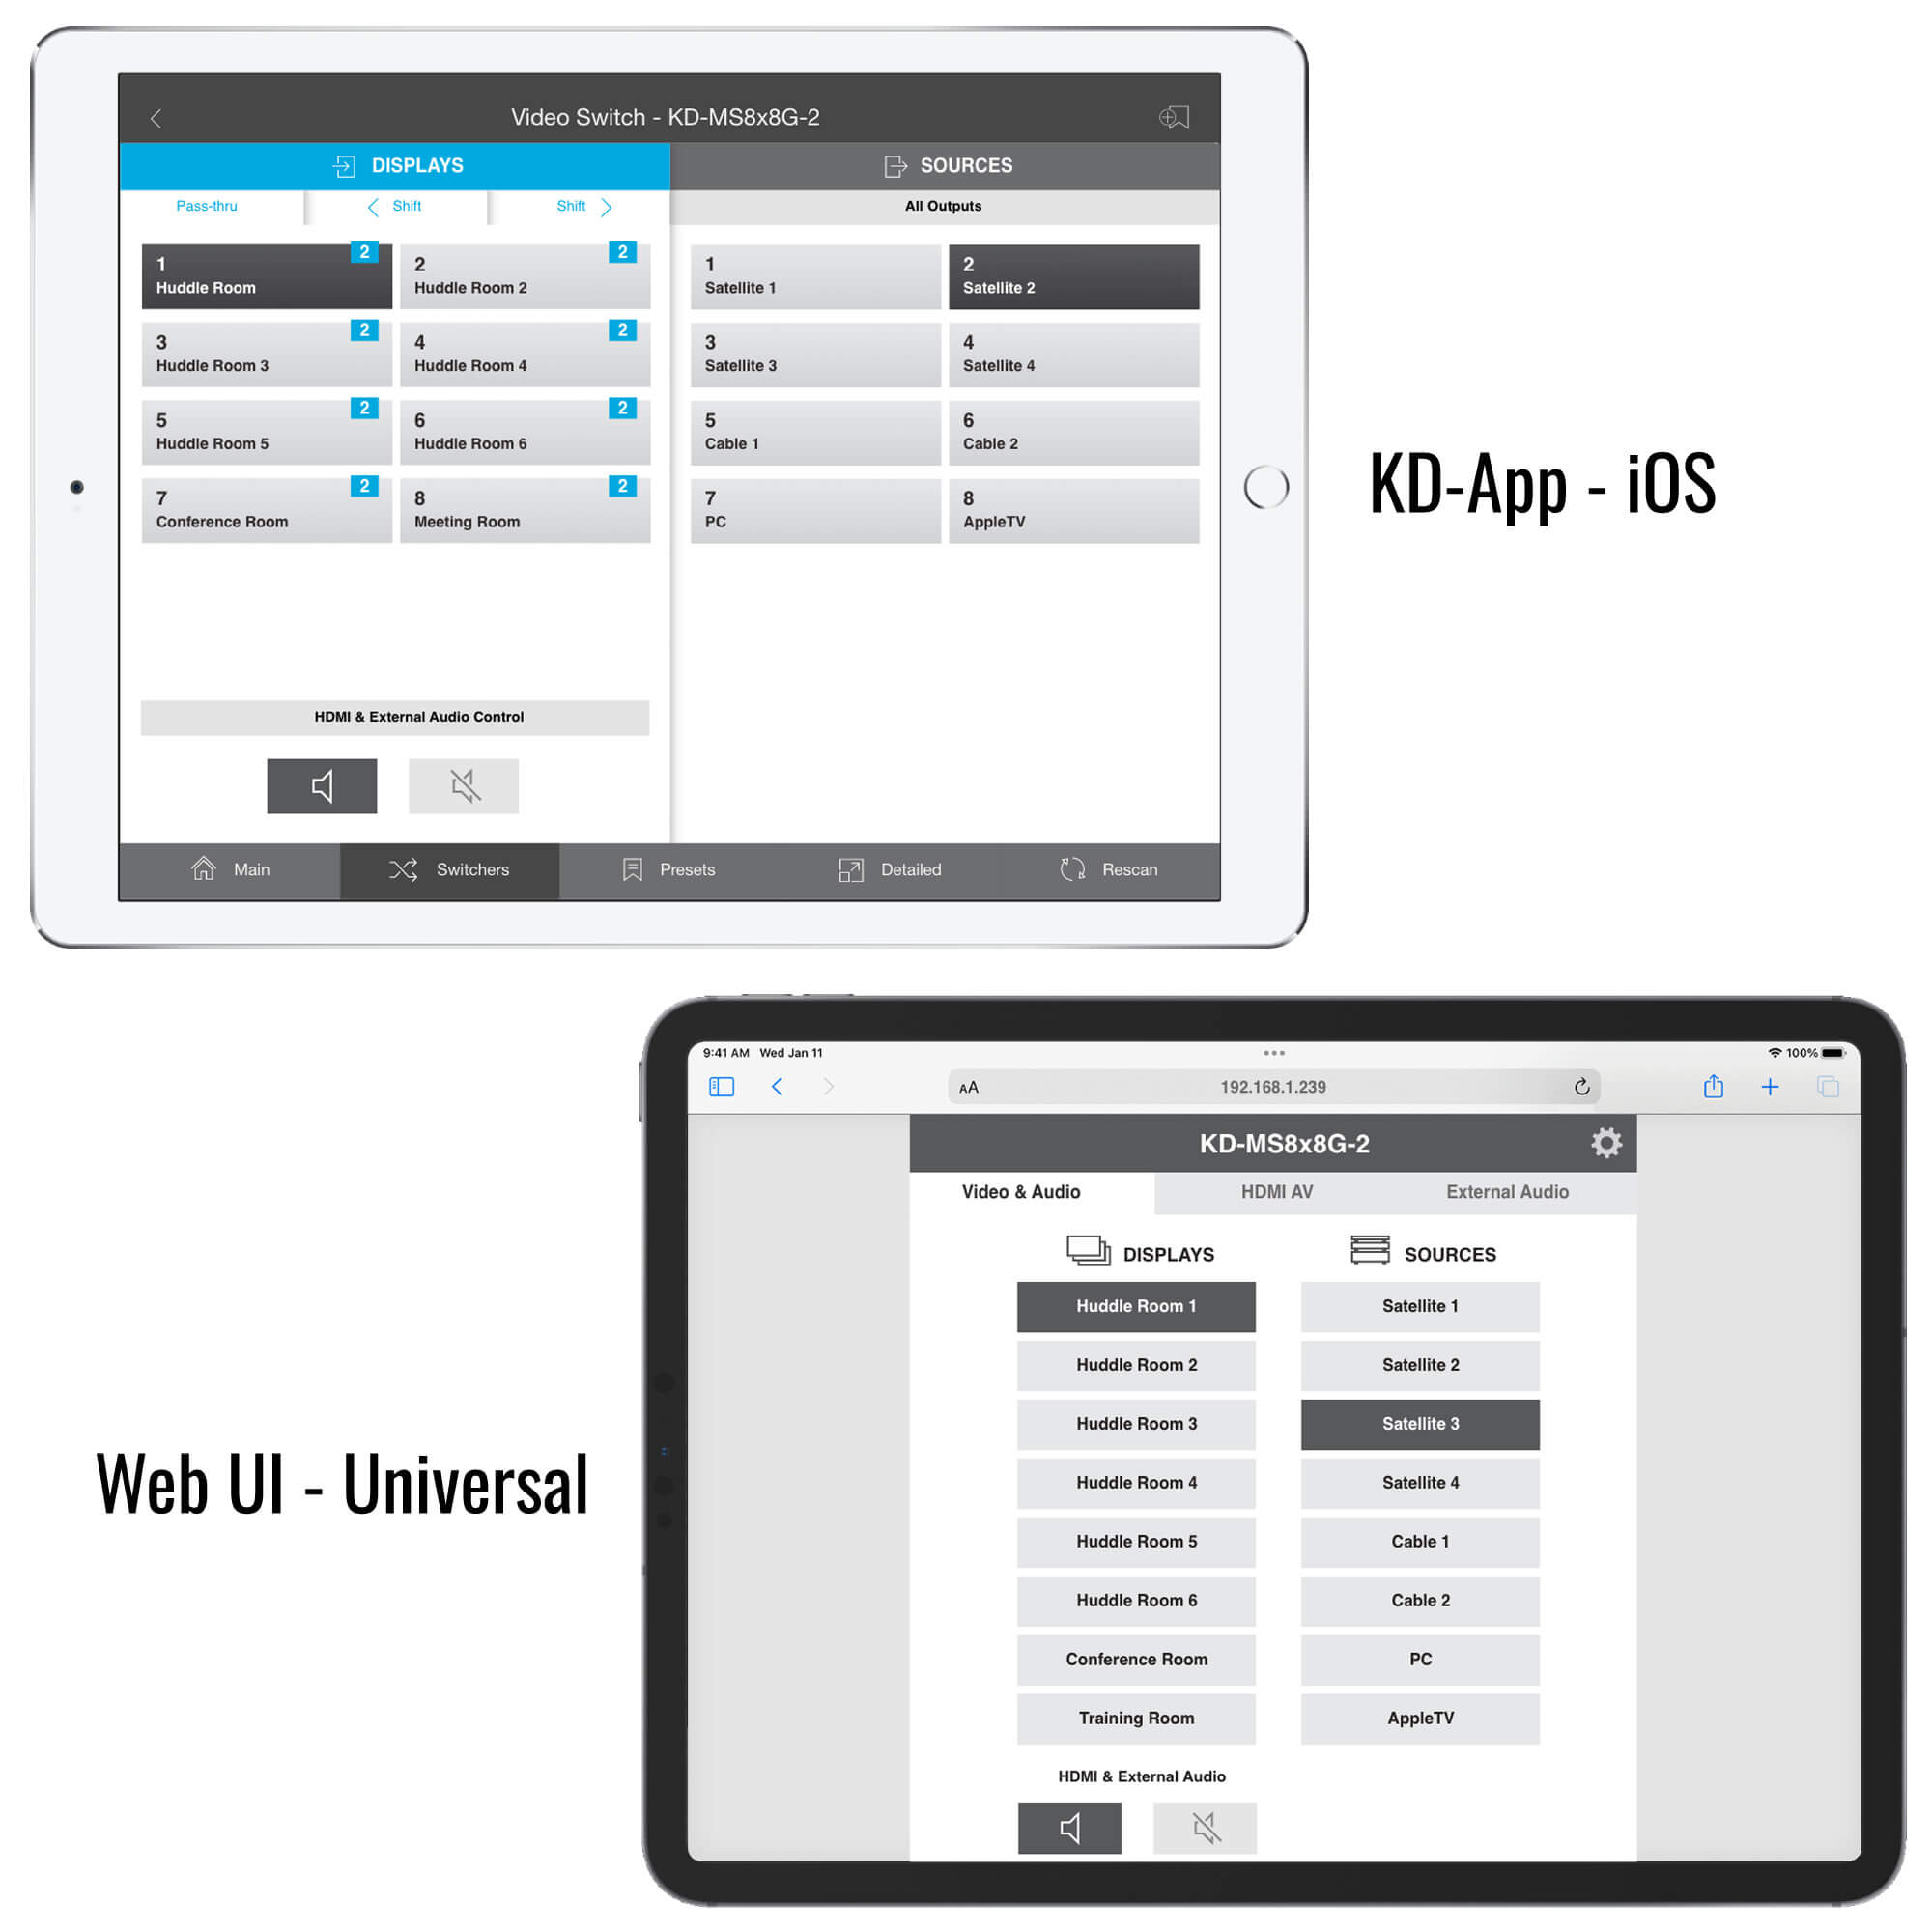 Thumbnail of KD-MS8x8G-2 Web UI and KD-App Interface